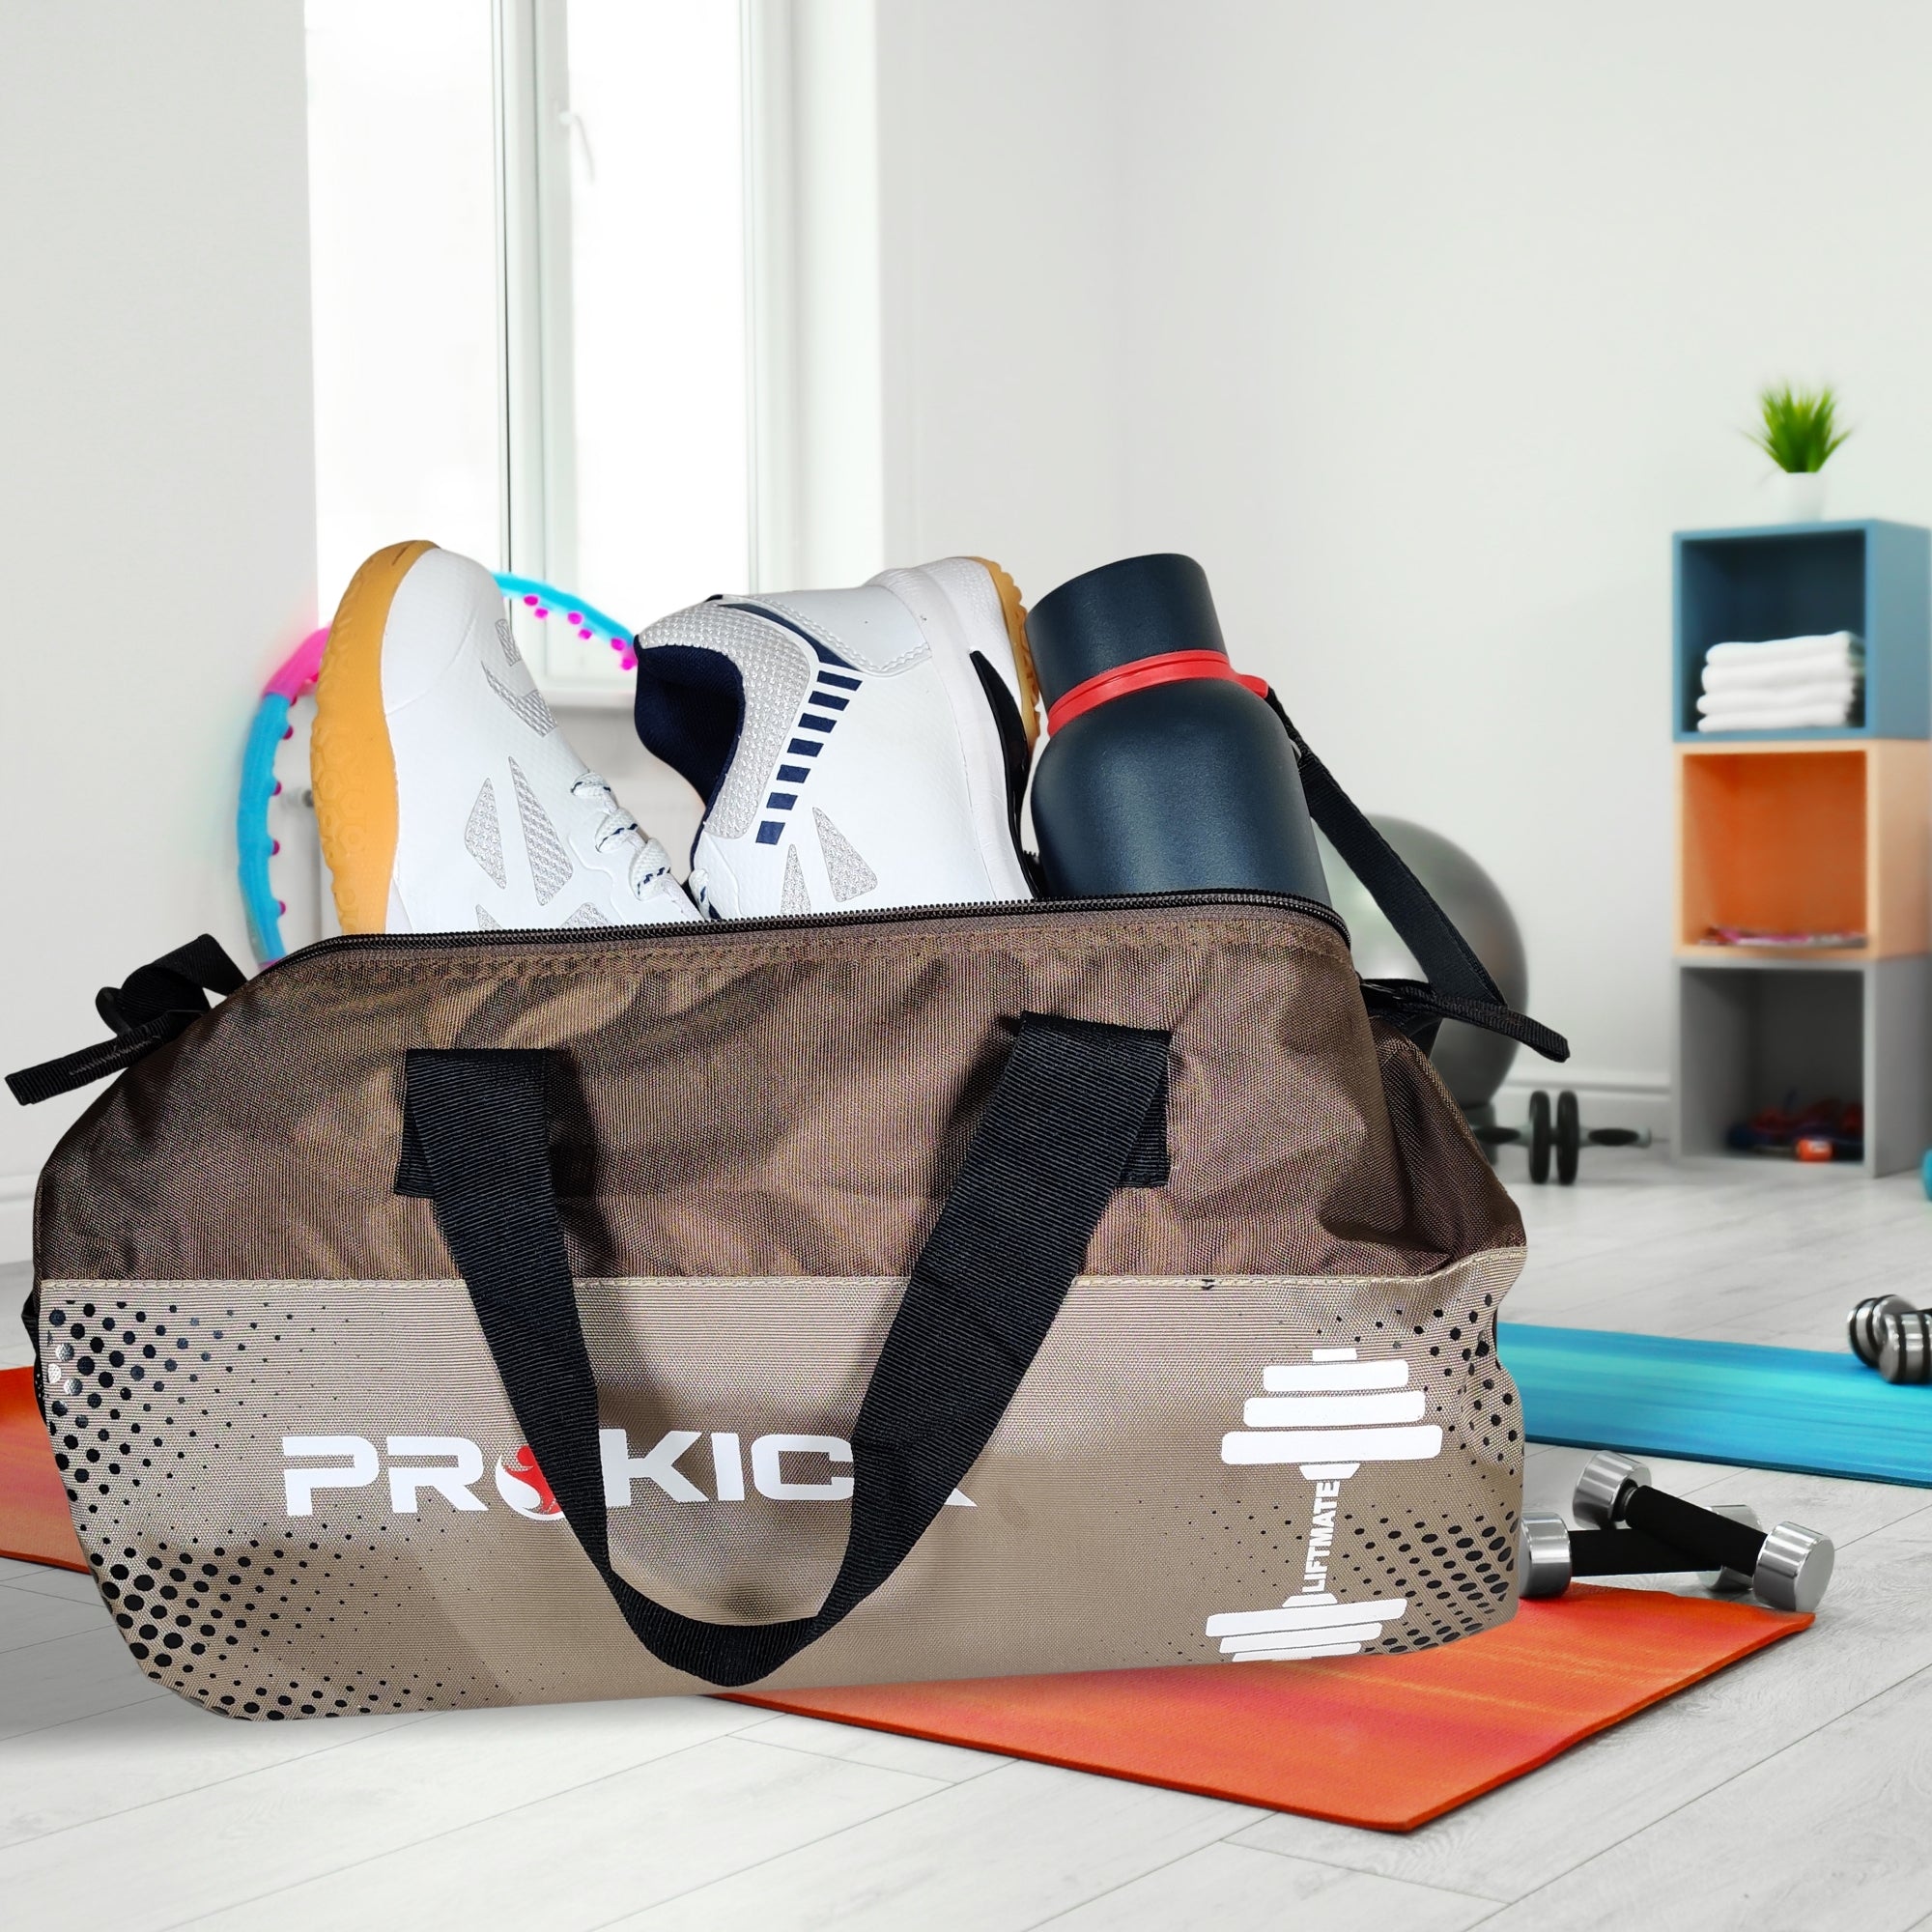 Reebok Gym Bag | Bags, Gym bag, Reebok